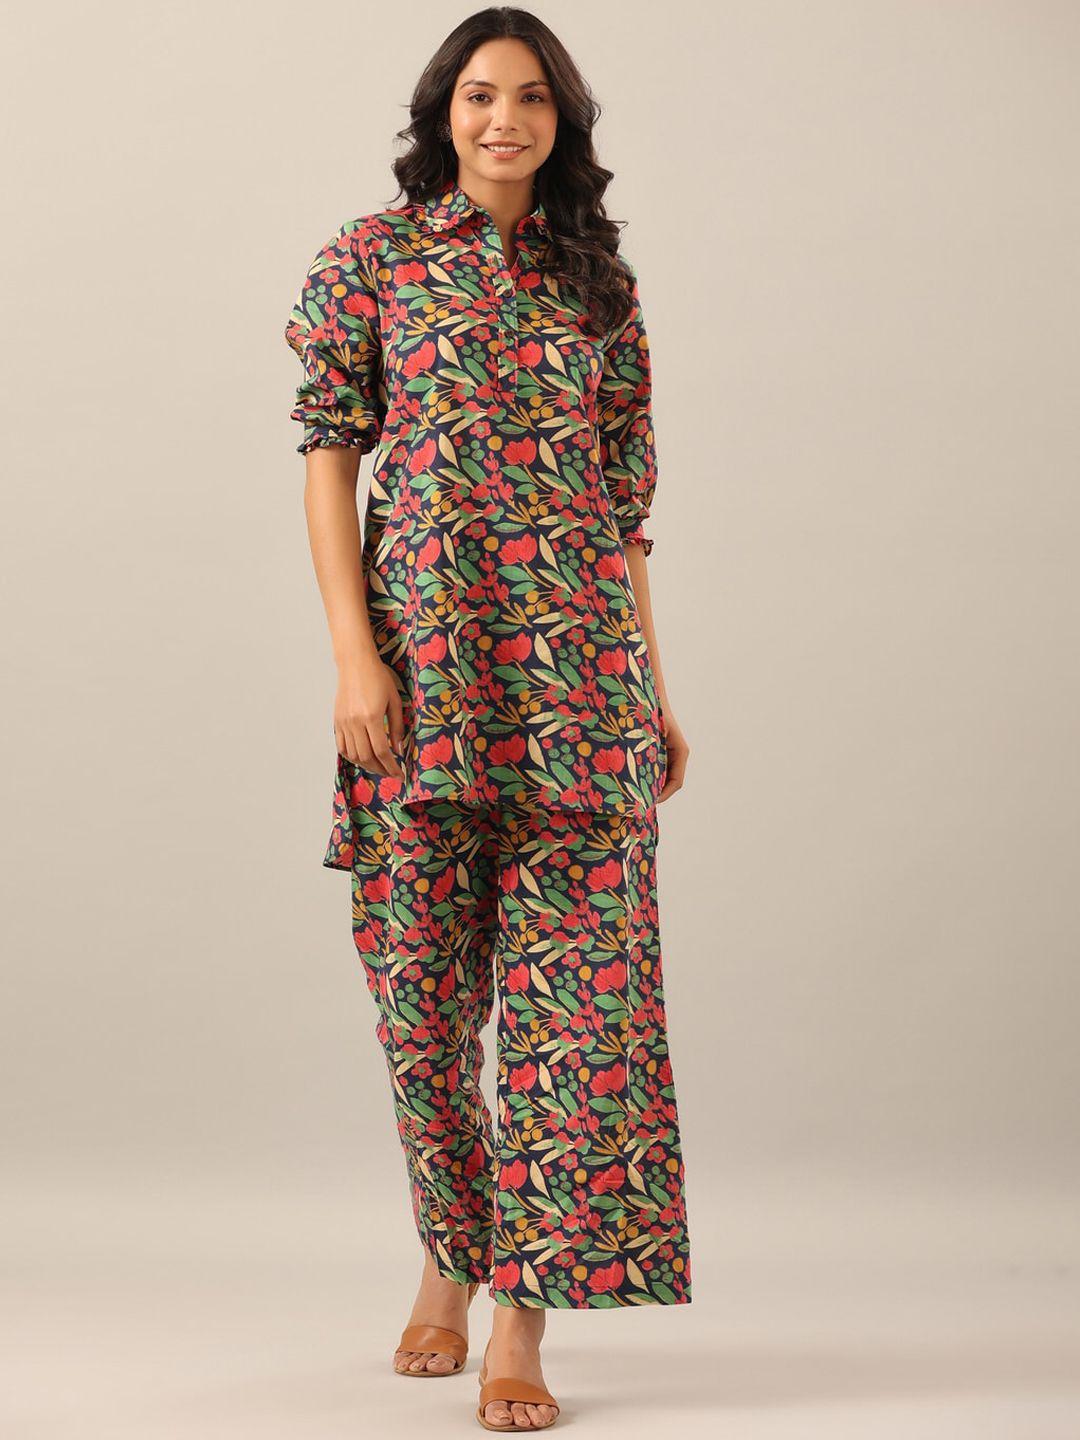 jisora-women-floral-printed-pure-cotton-night-suit